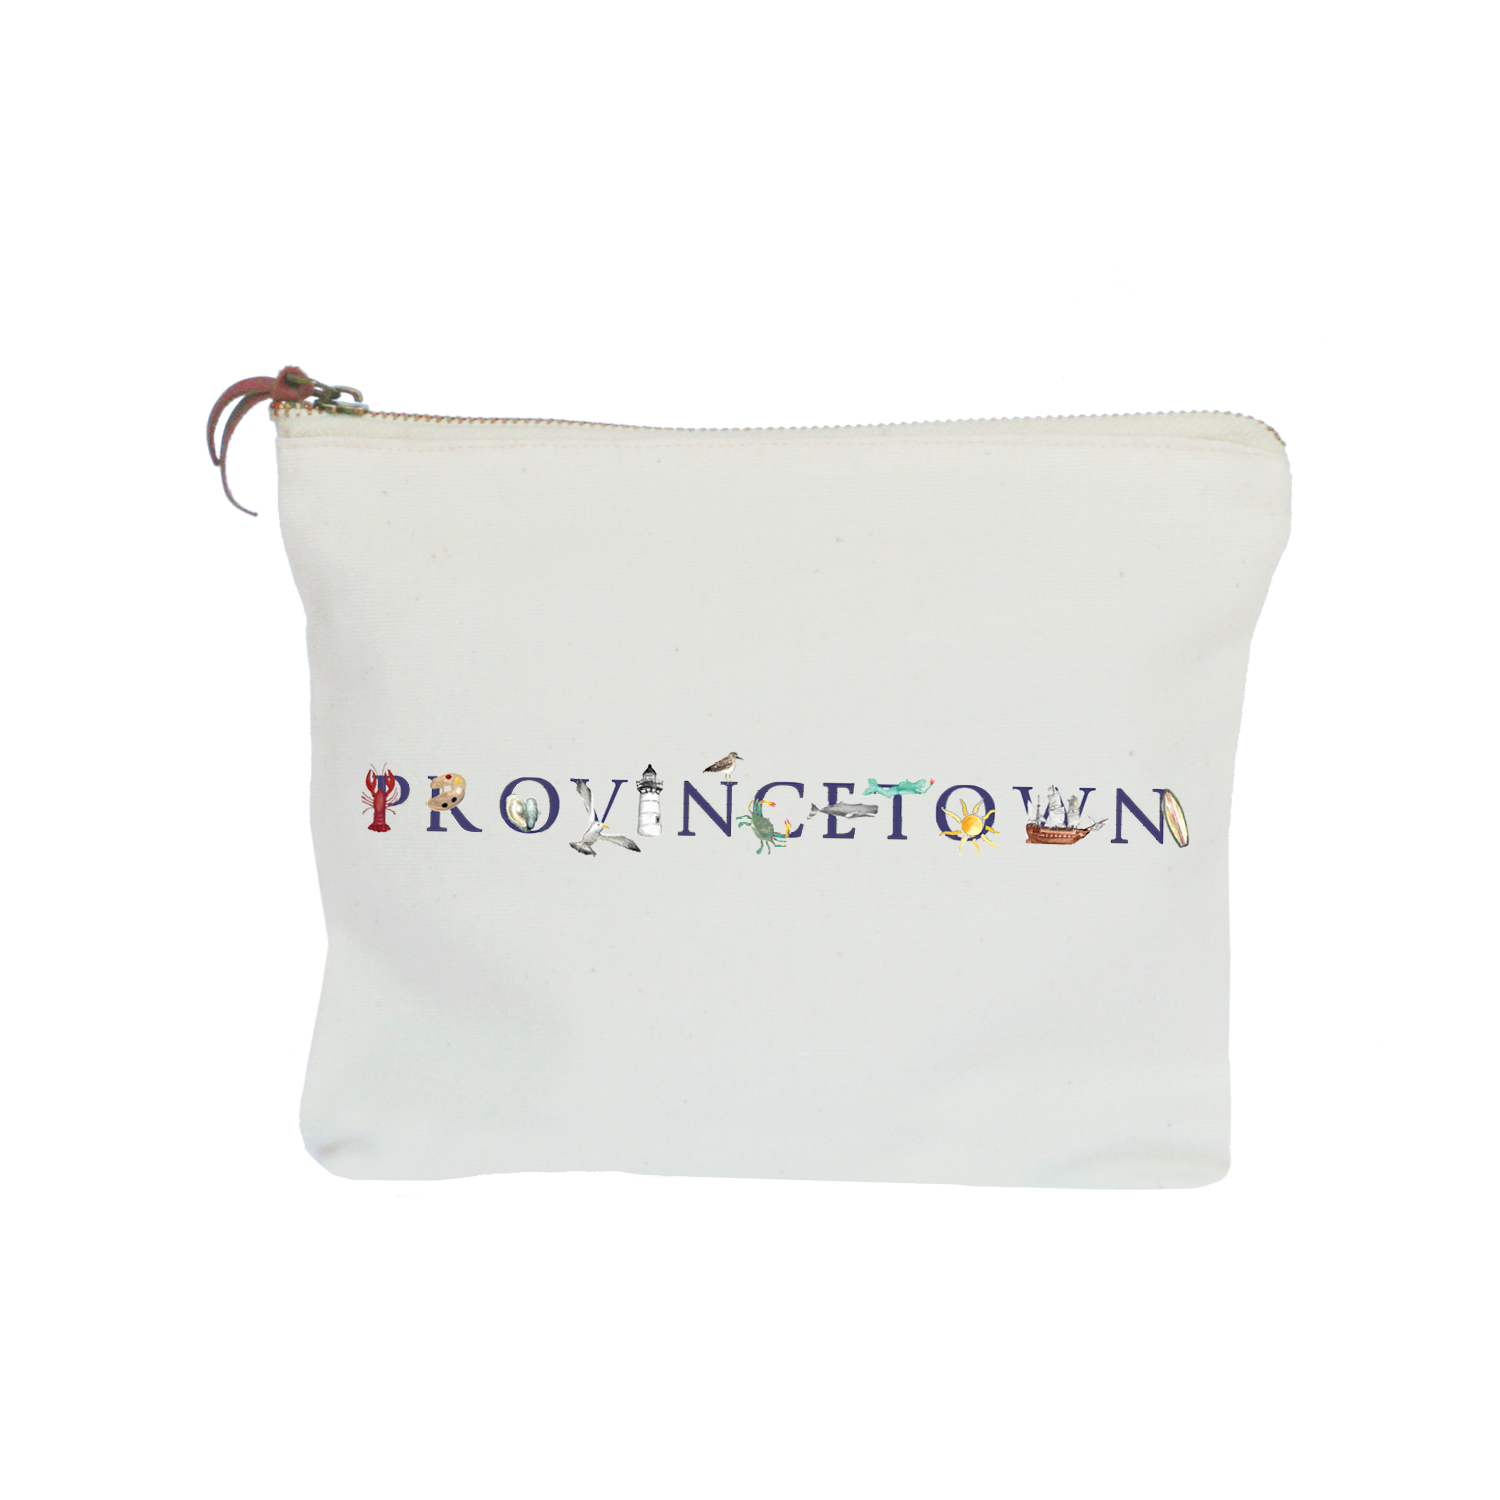 Provincetown zipper pouch